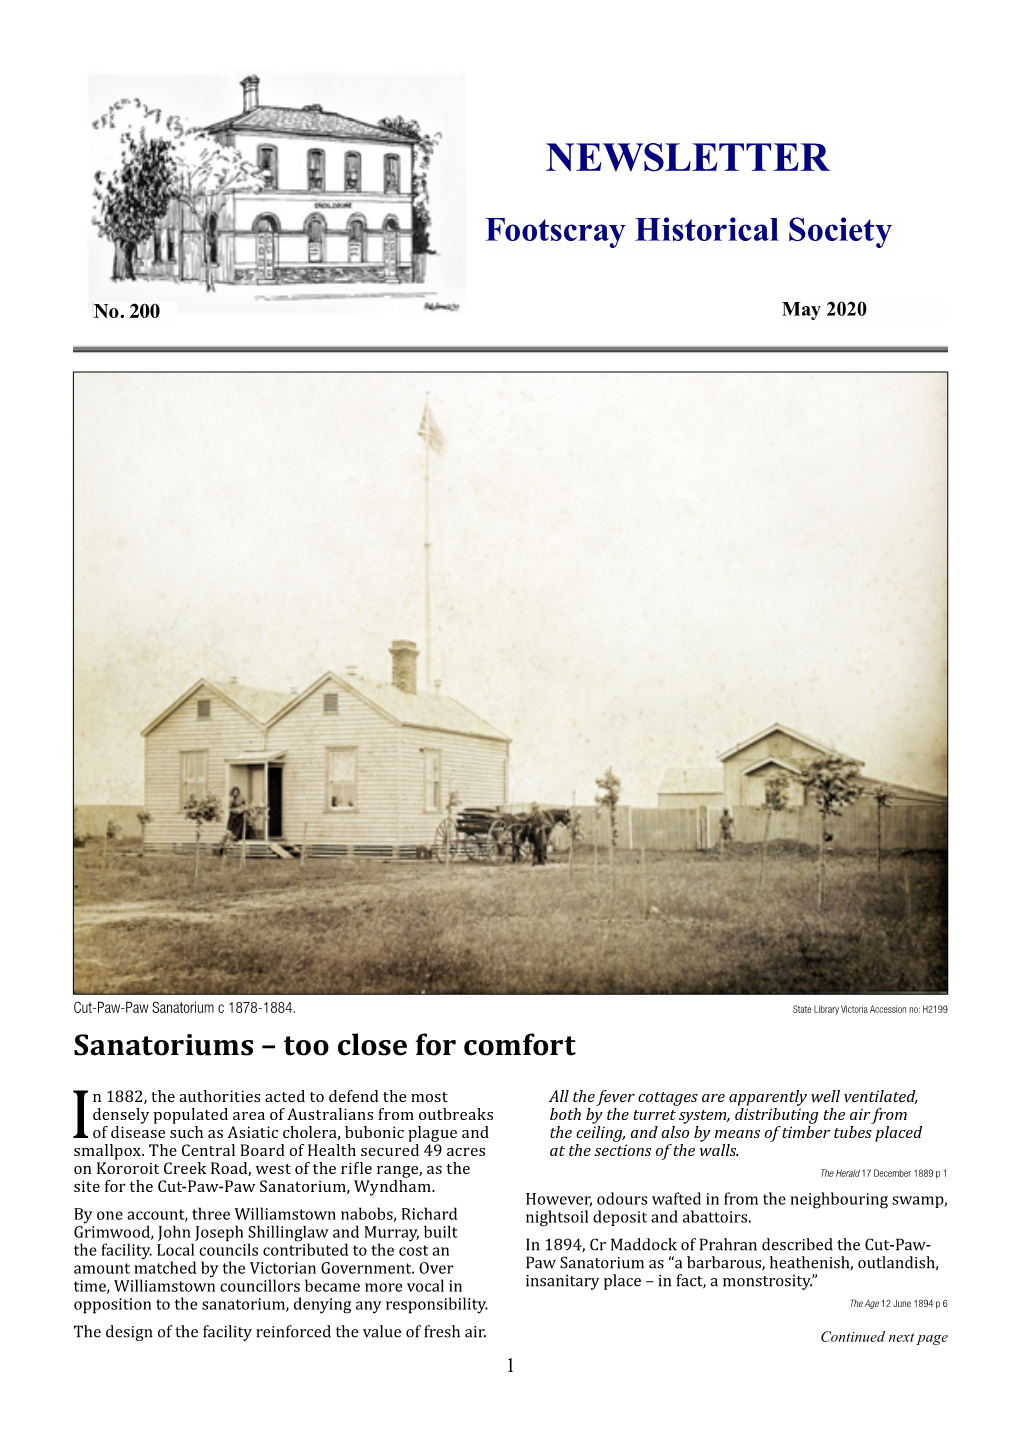 NEWSLETTER Footscray Historical Society